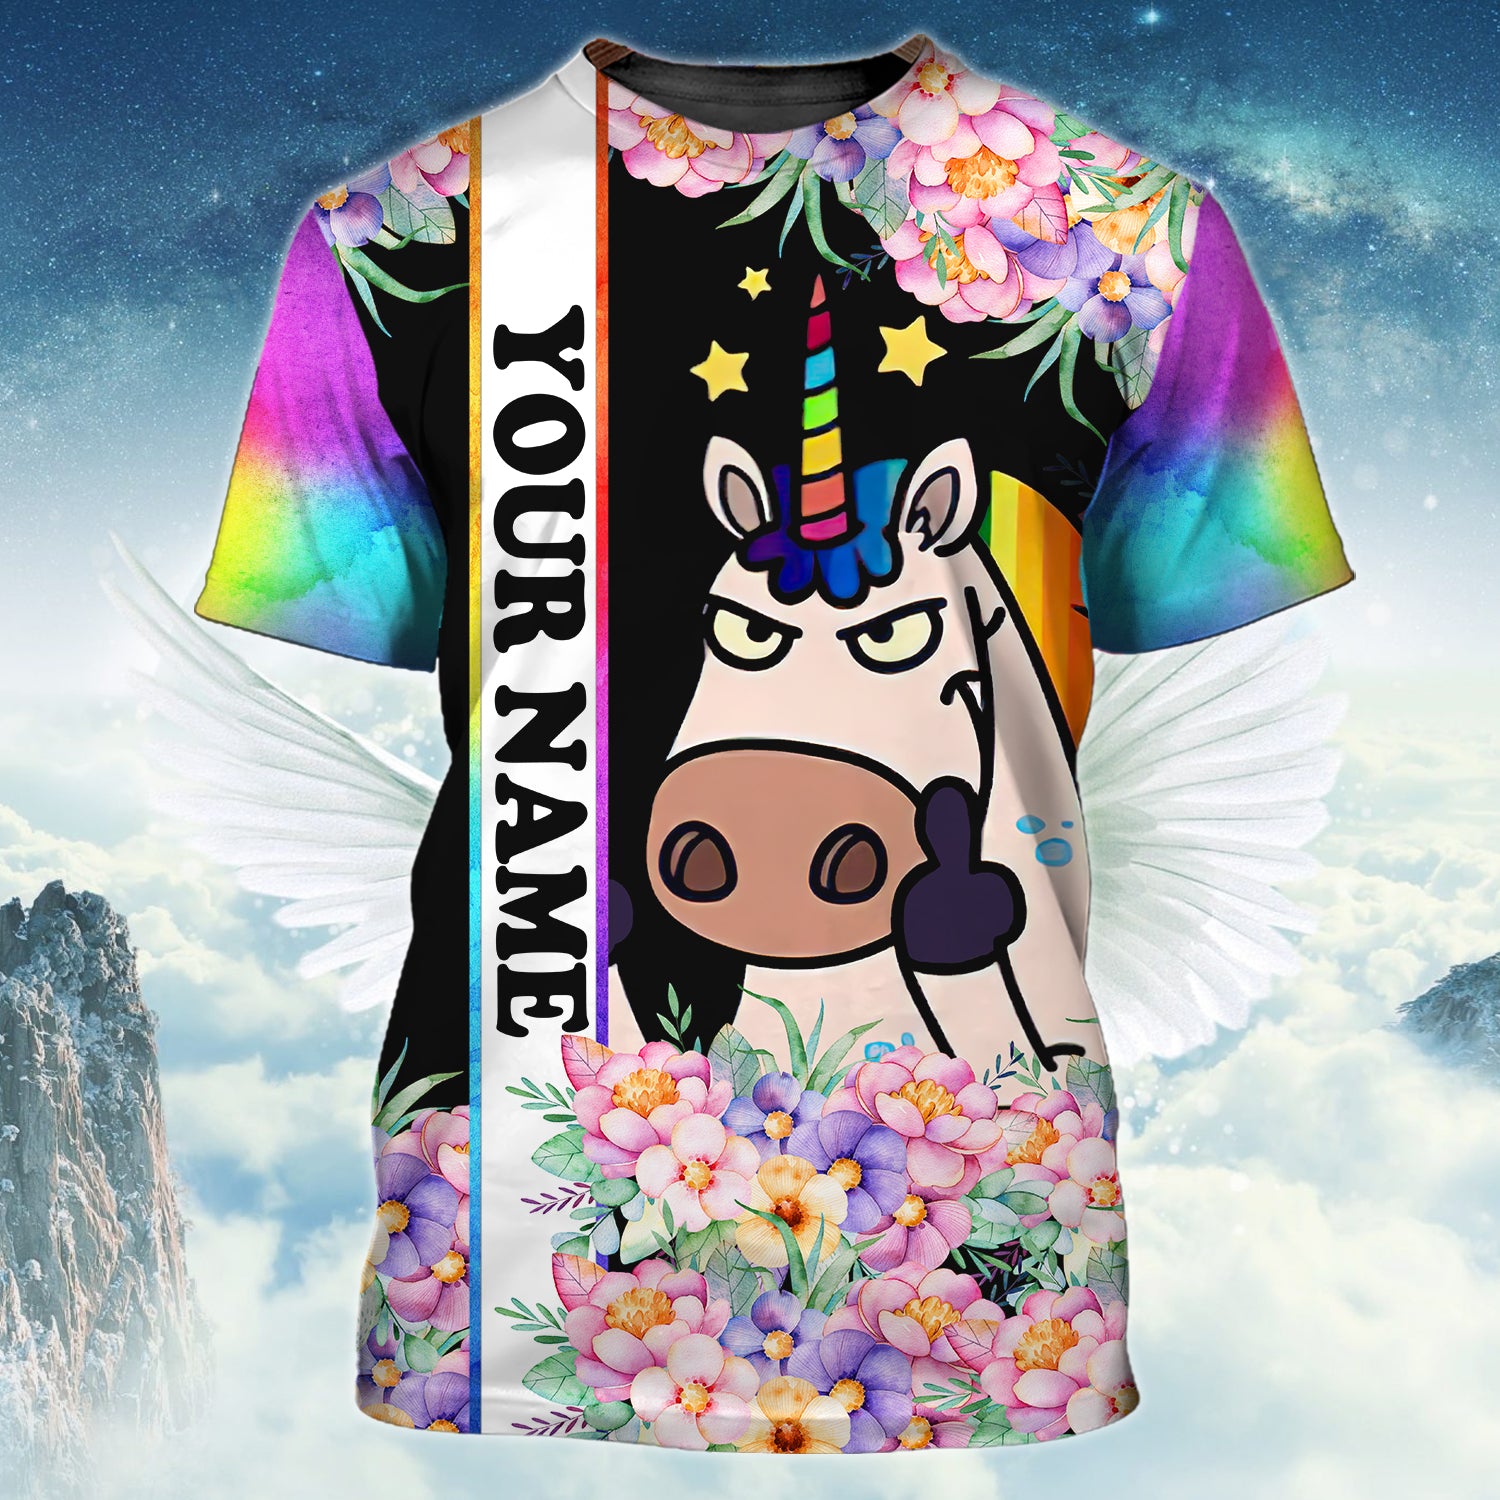 Unicorn 03 - Personalized Name 3D T Shirt - 16hb